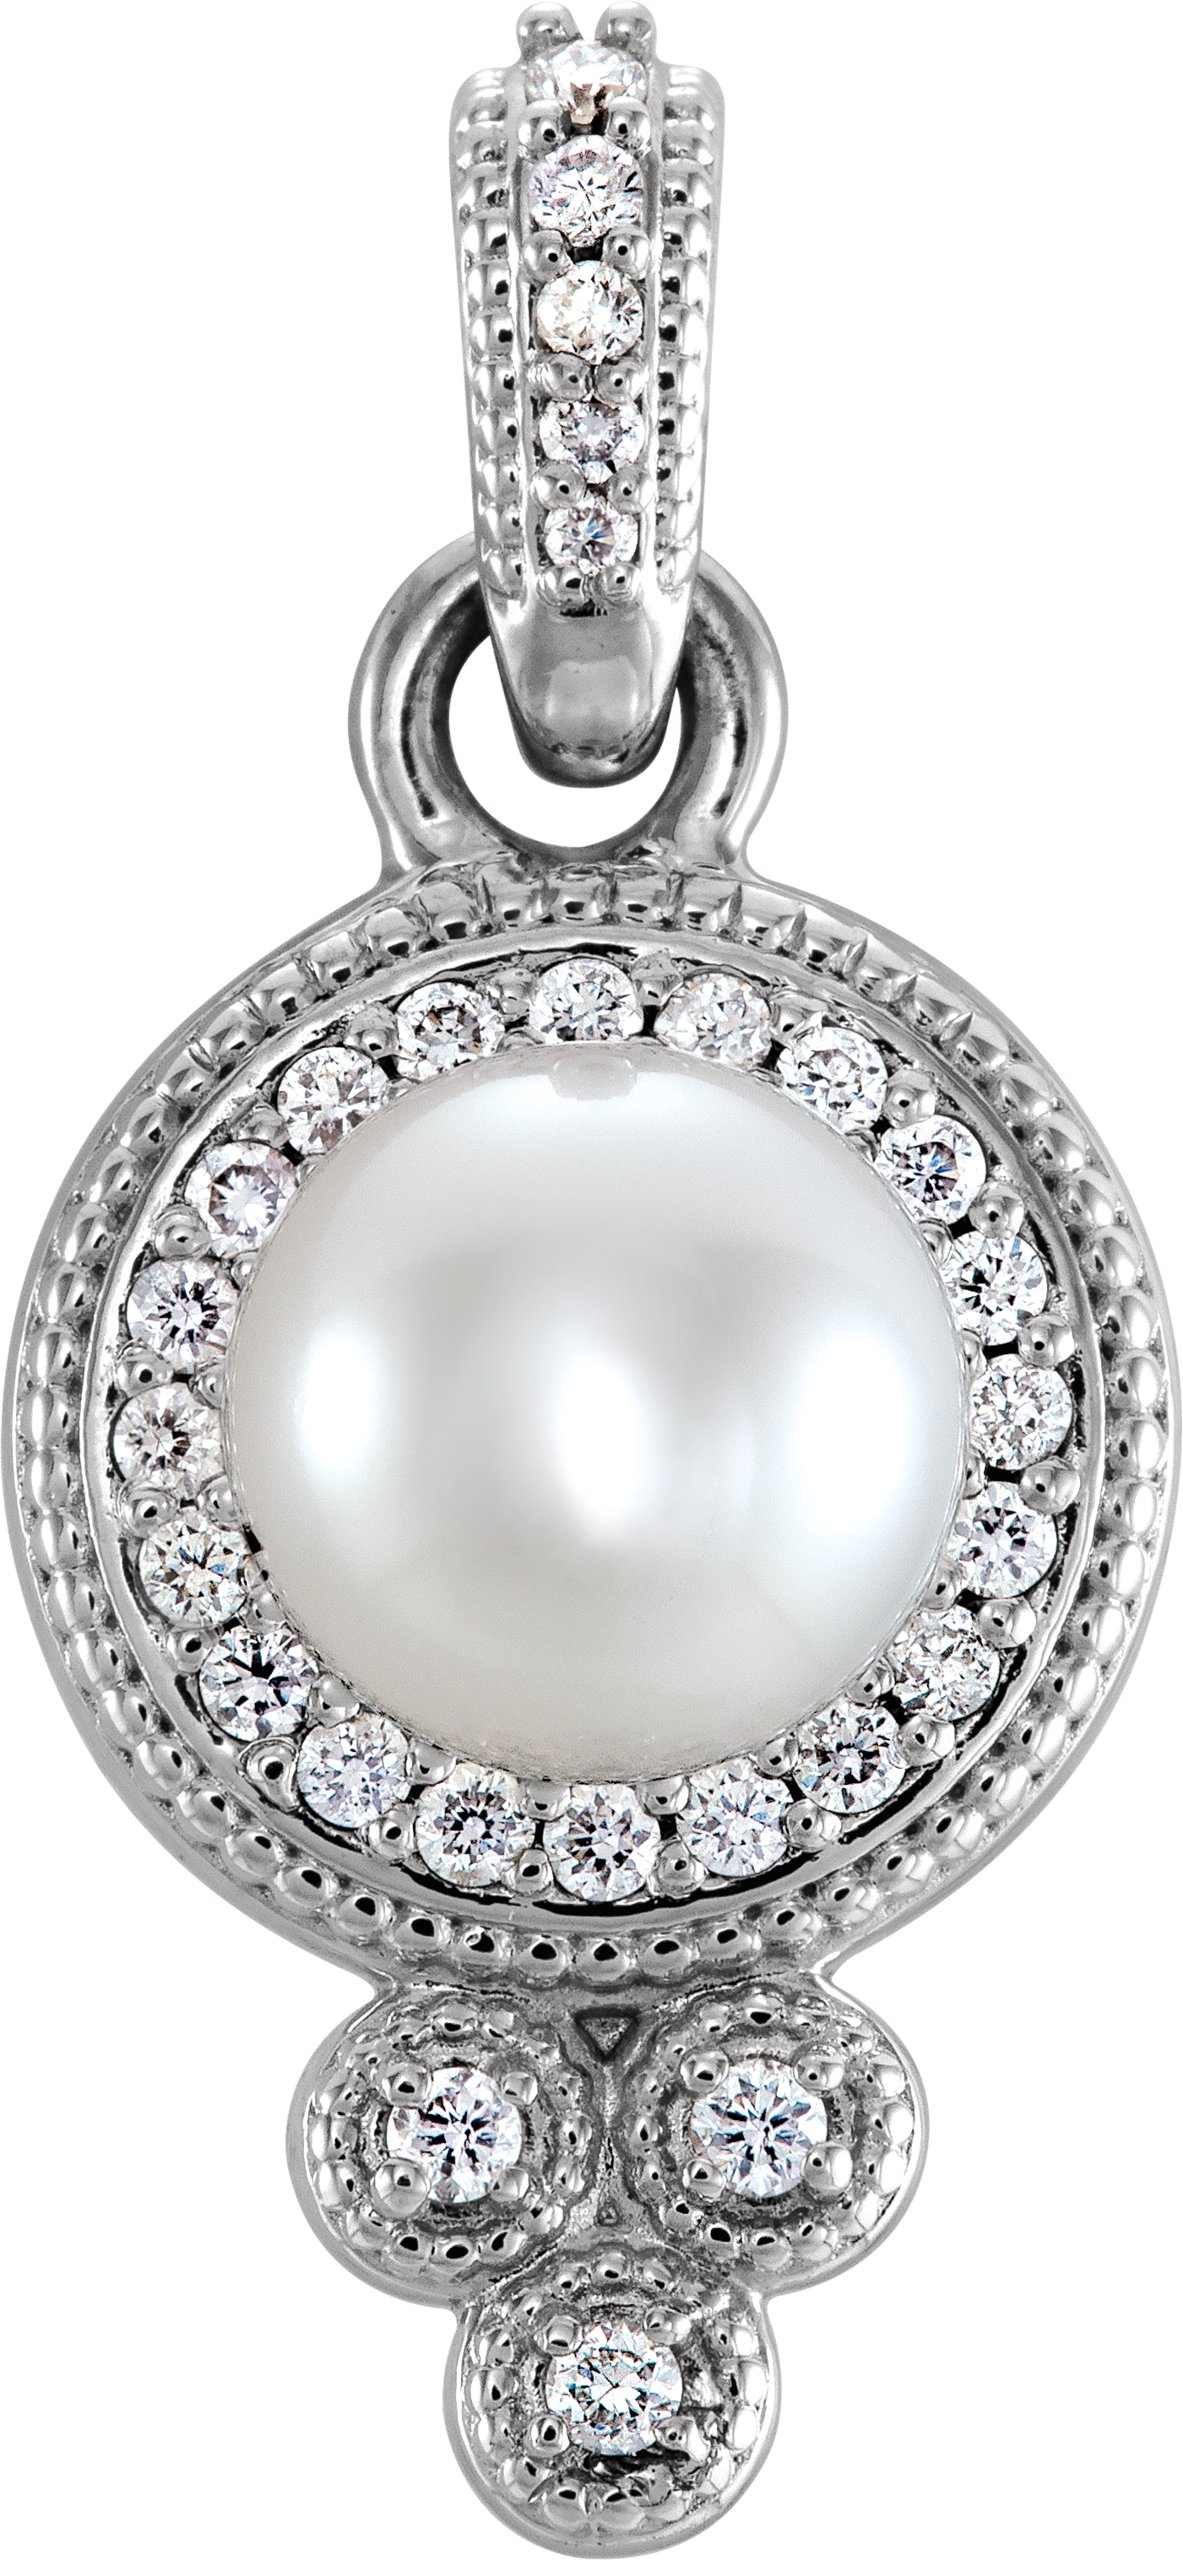 14K White Cultured White Freshwater Pearl & 1/8 CTW Natural Diamond Pendant